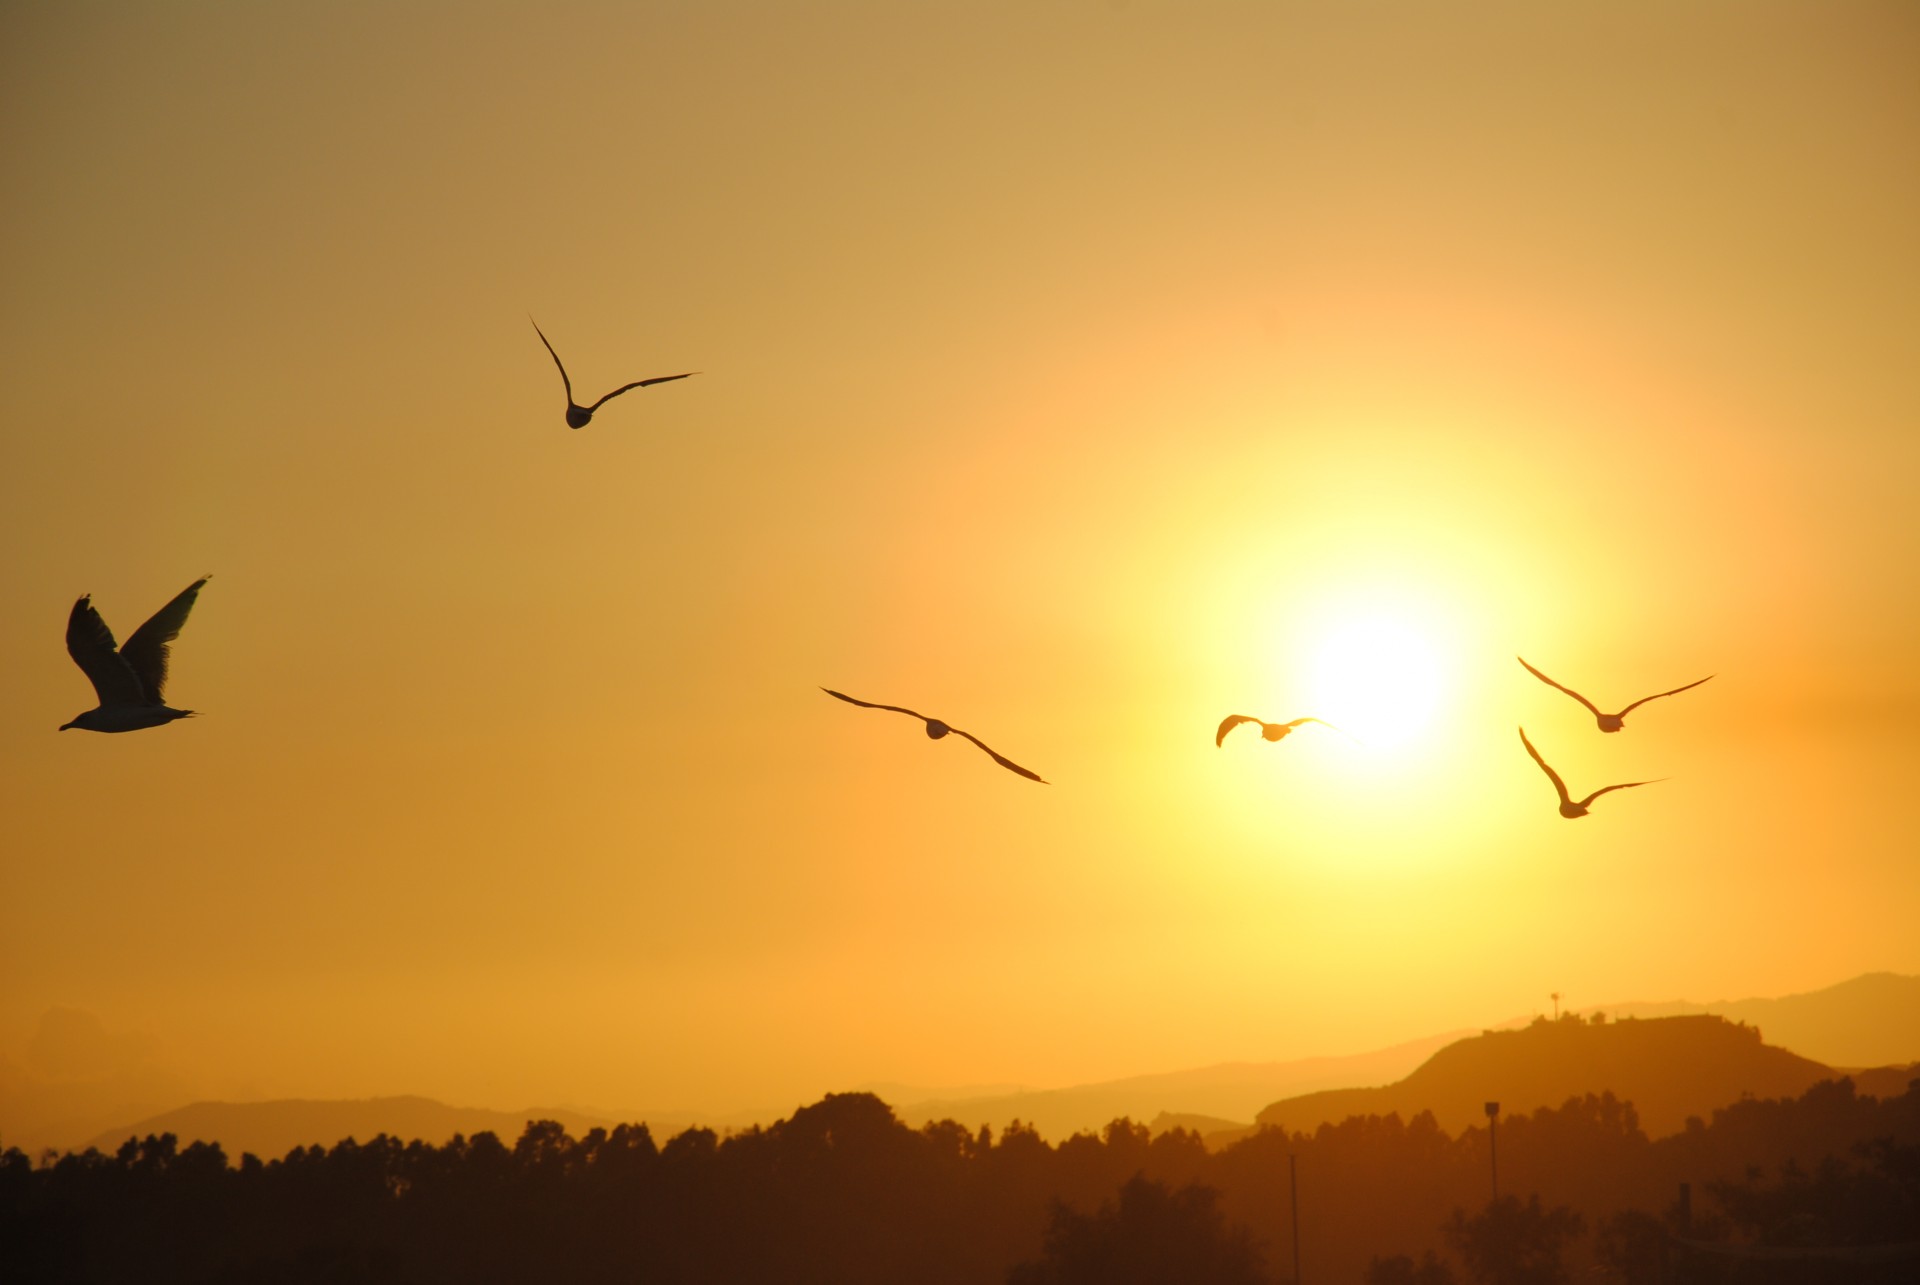 Seagulls At Sunset